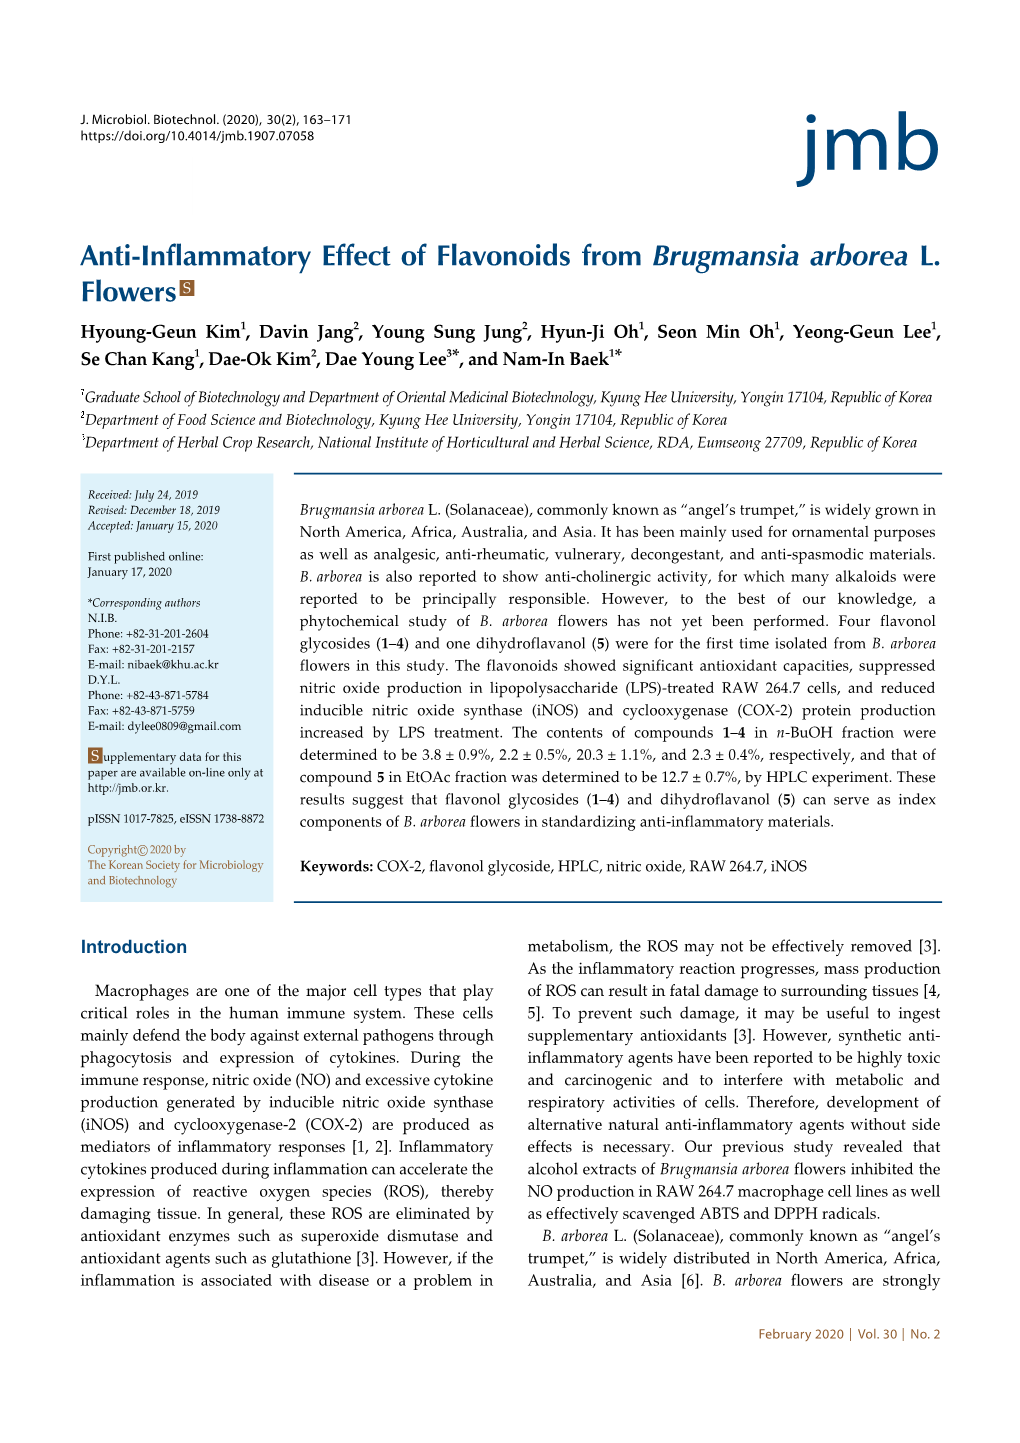 Anti-Inflammatory Effect of Flavonoids from Brugmansia Arborea L. Flowers